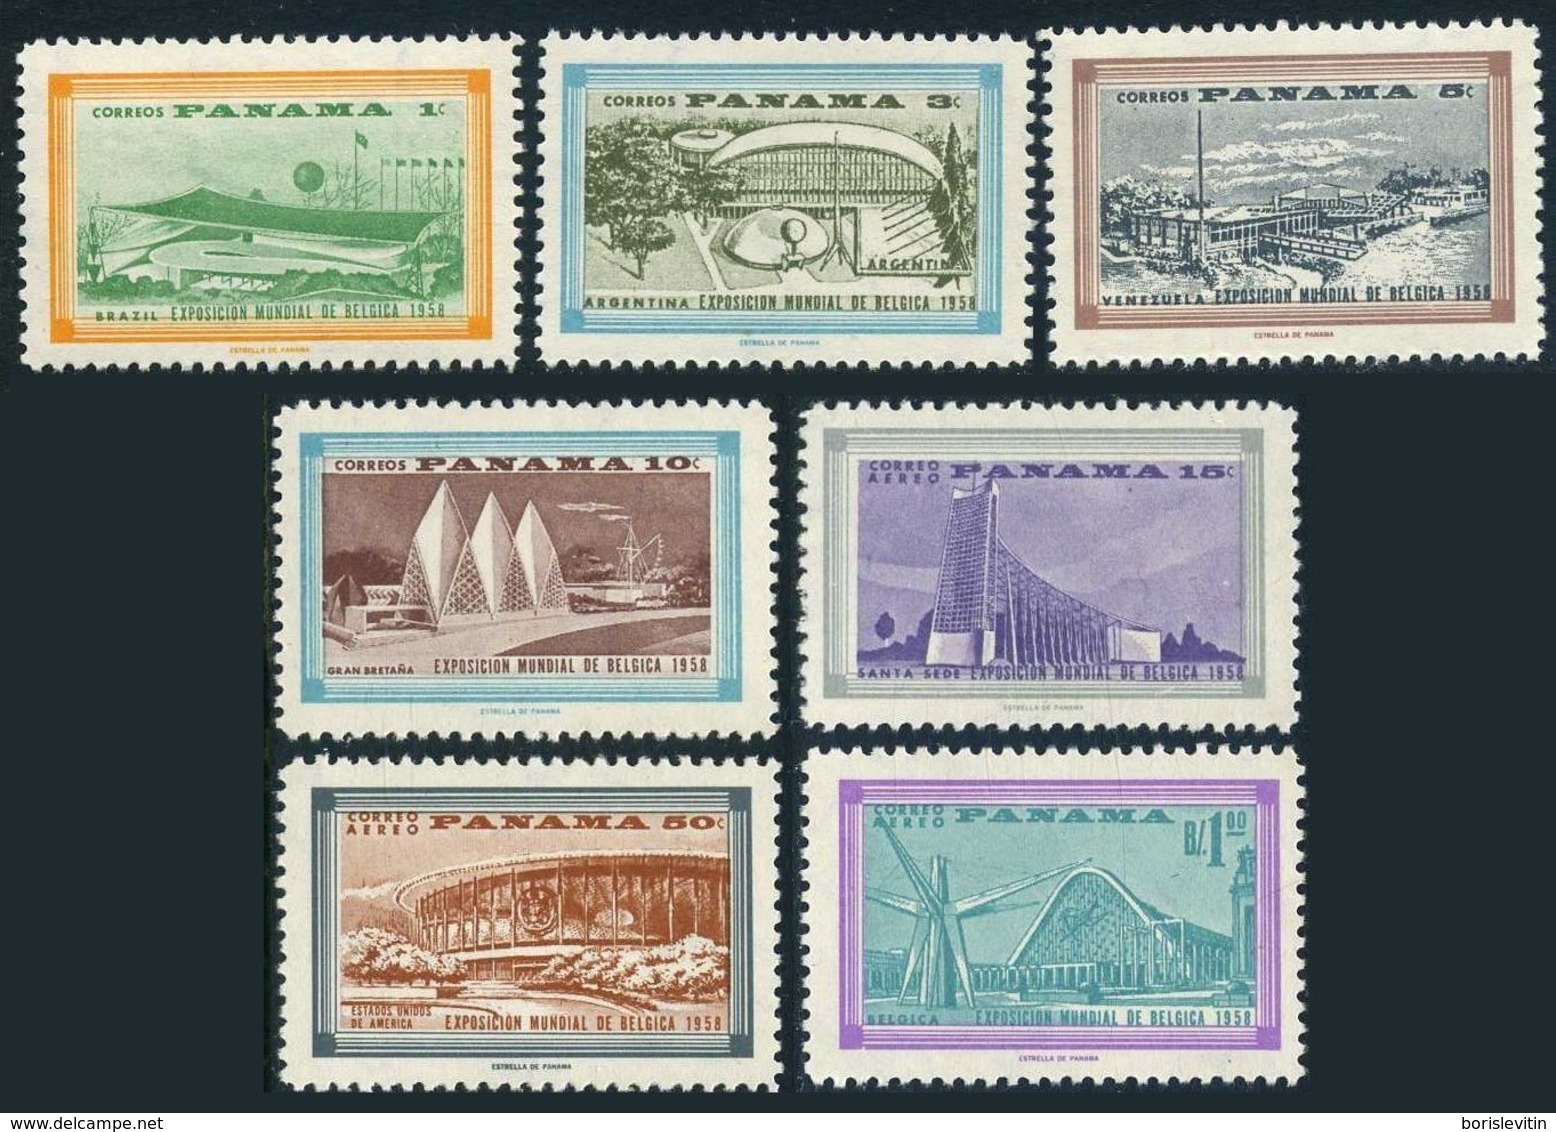 Panama 418-421,C207-C209,MNH.Michel 530-536. EXPO Brussels-1958.Pavilions. - 1958 – Brussels (Belgium)